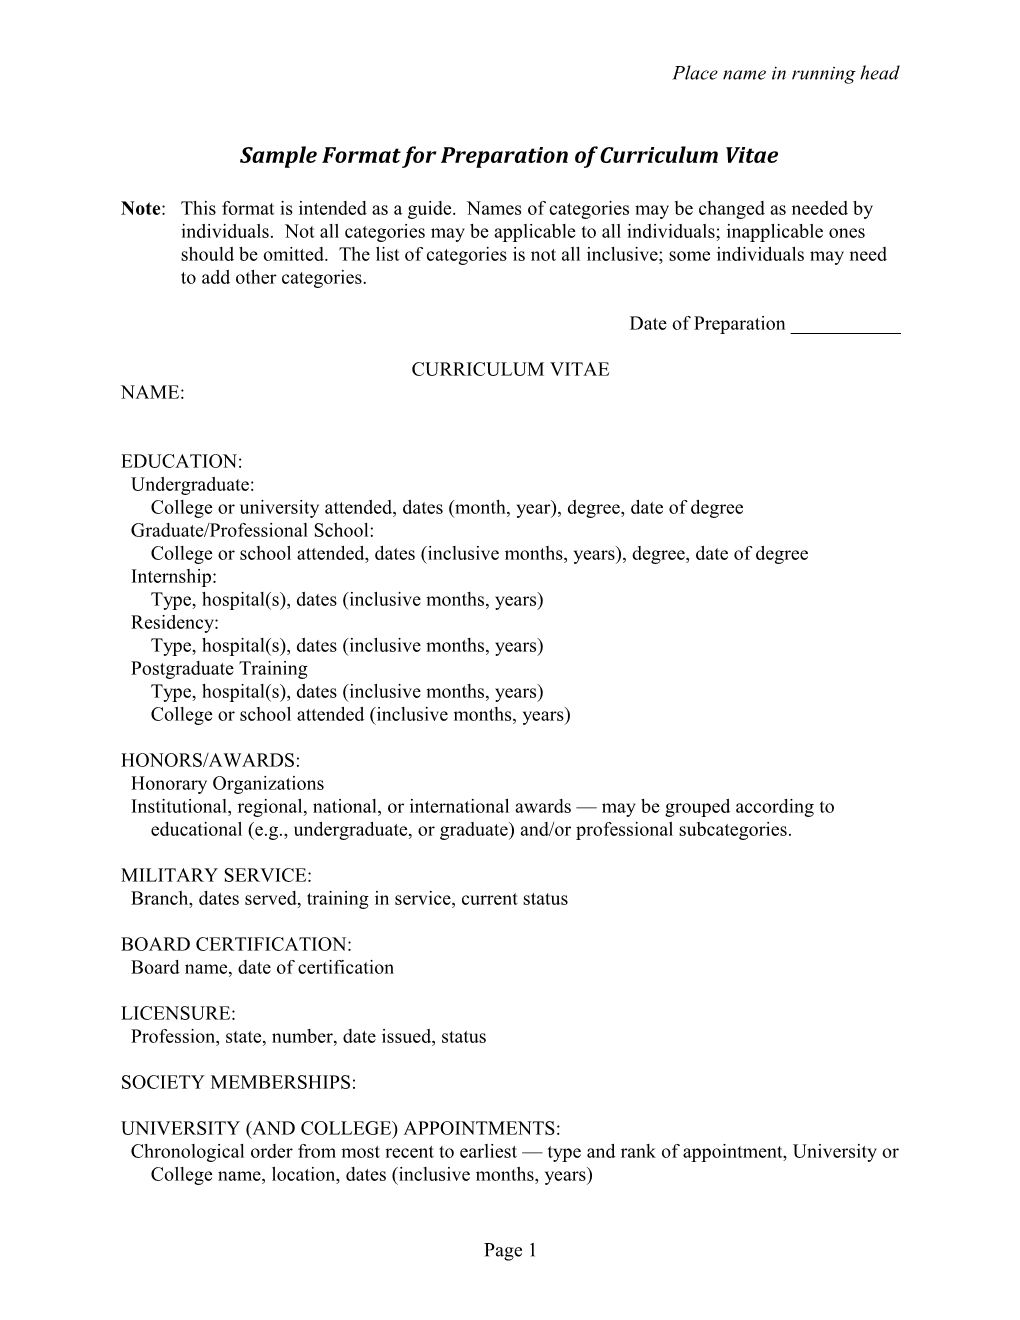 Sample Format for Preparation of Curriculum Vitae